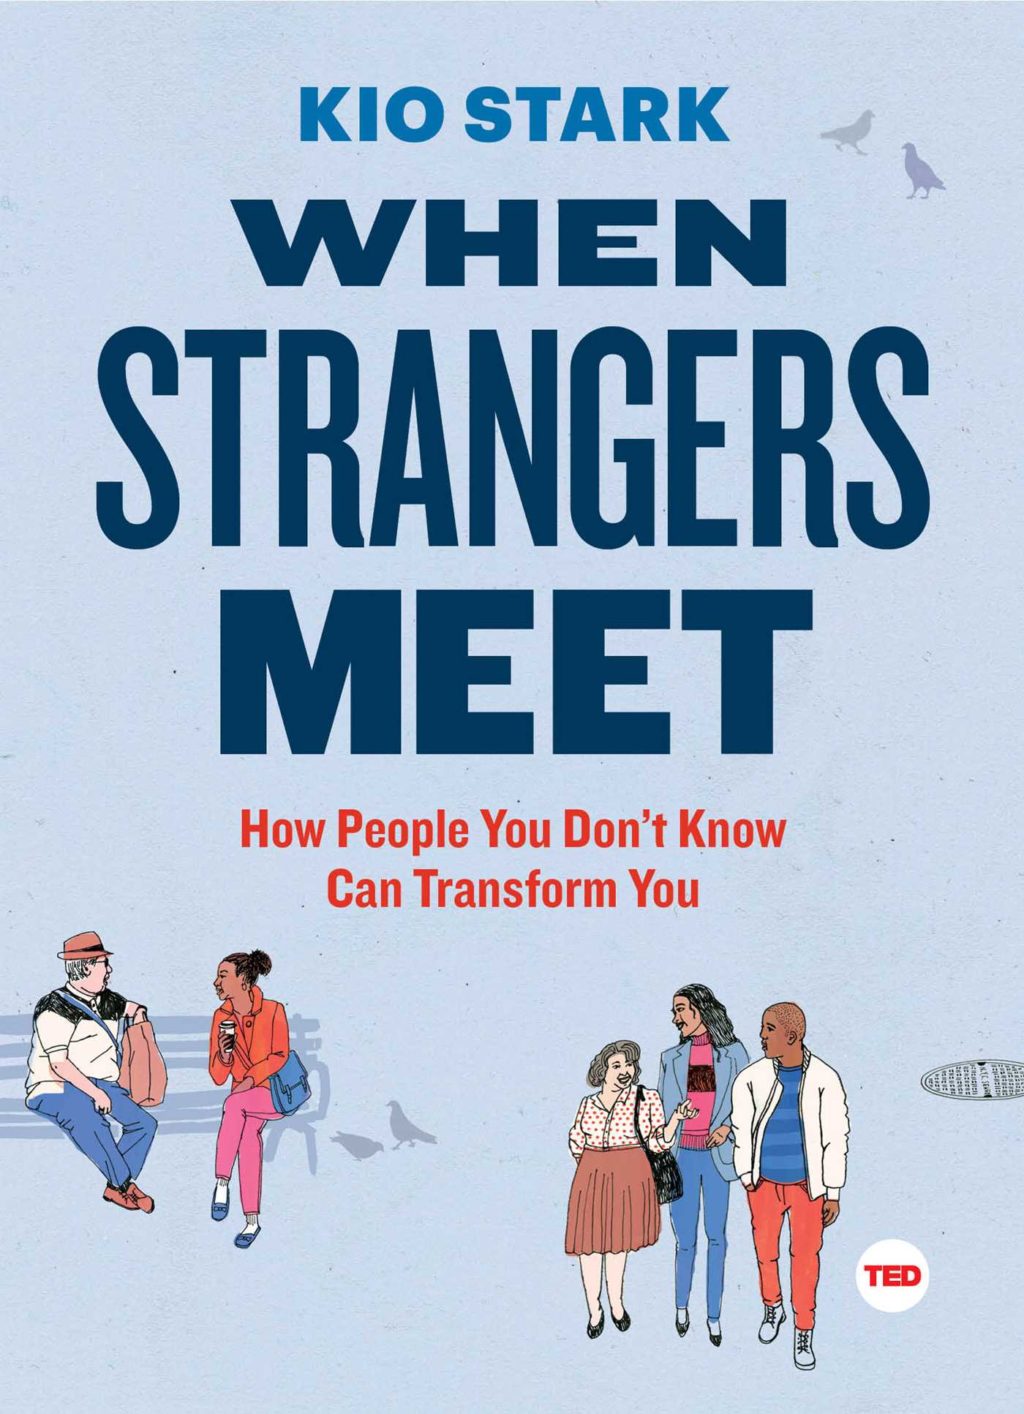 Meeting strangers. People you know. We meet at stranger.